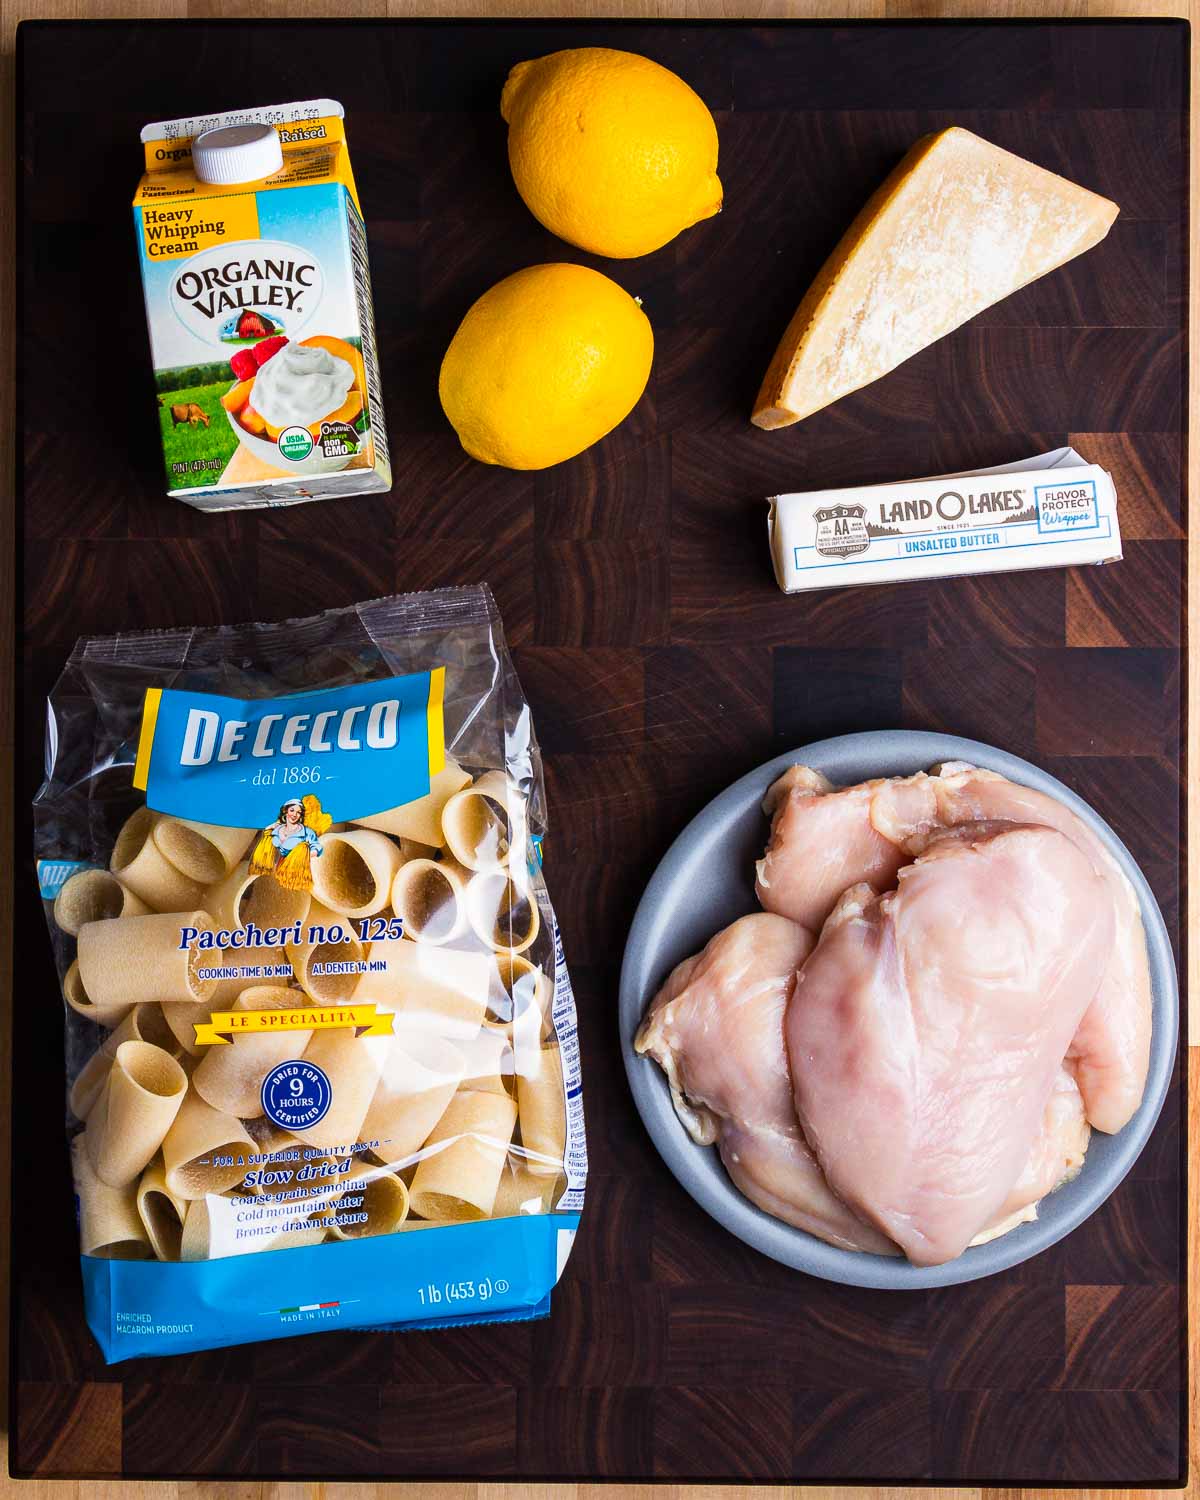 Ingredients shown: heavy cream, lemons, Parmigiano Reggiano, butter, pasta, and chicken breasts.